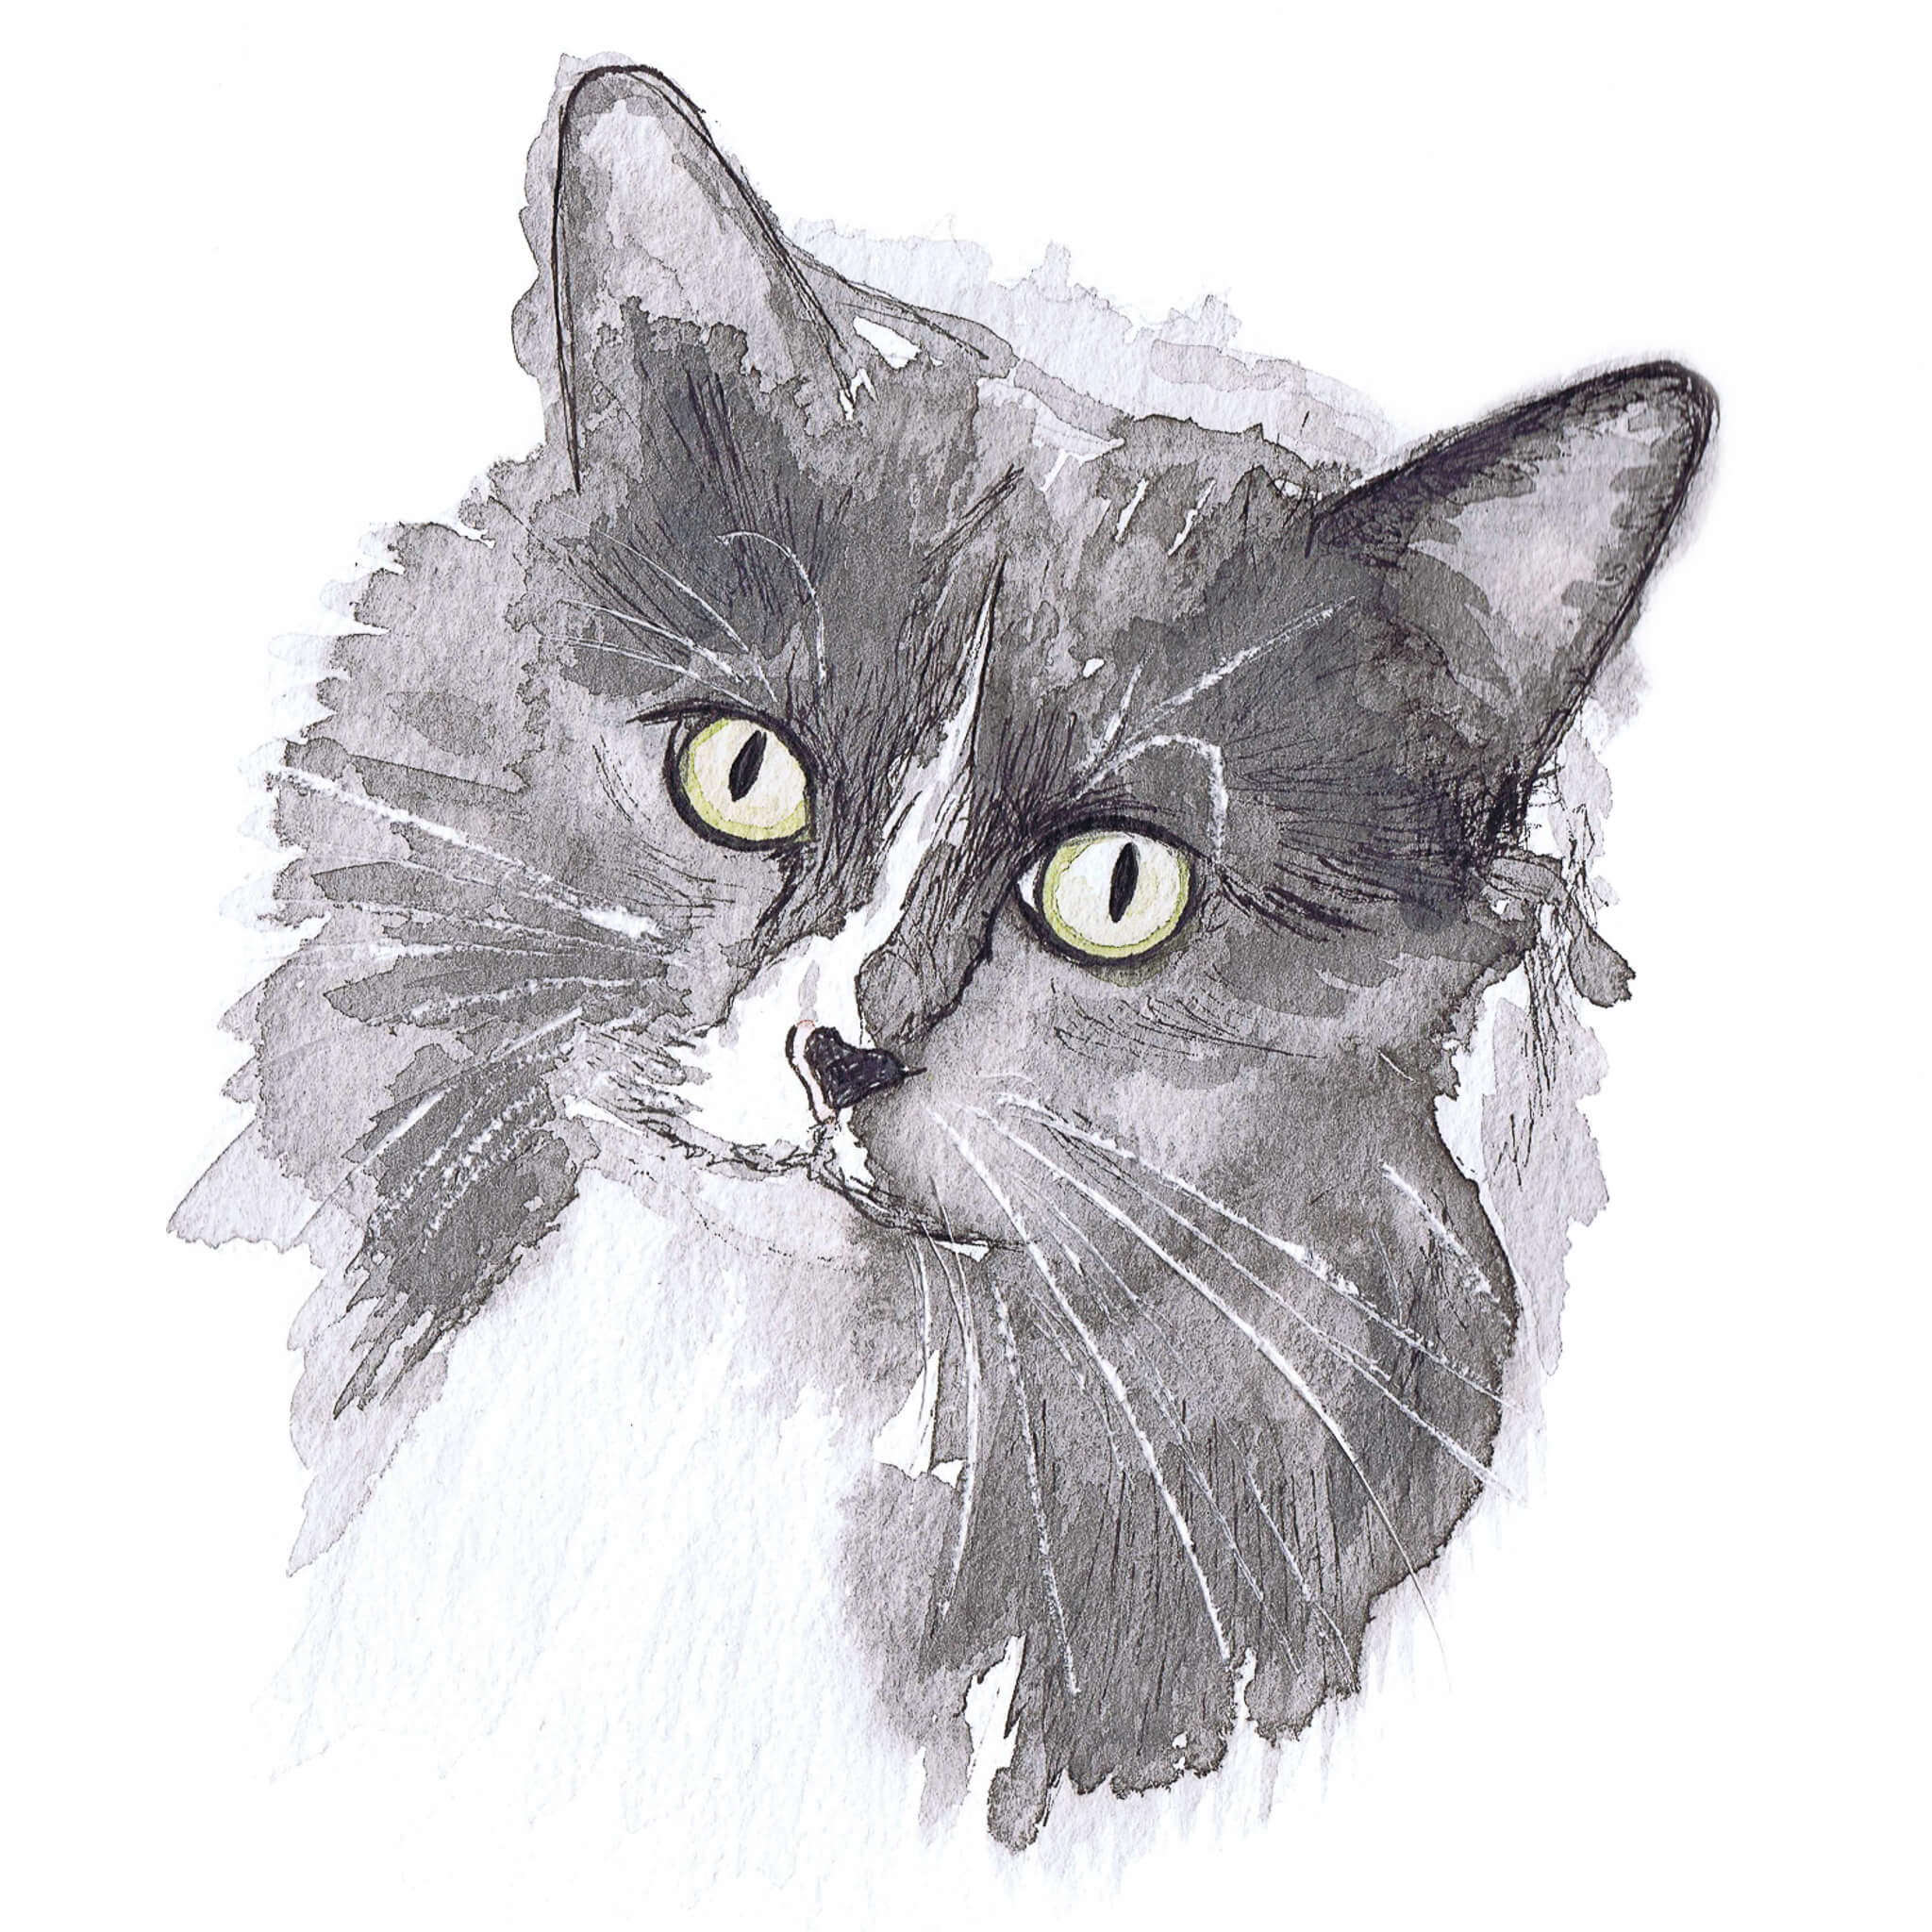 Pet Portrait of a Cat by watercolor sketcher Katrina Dawn